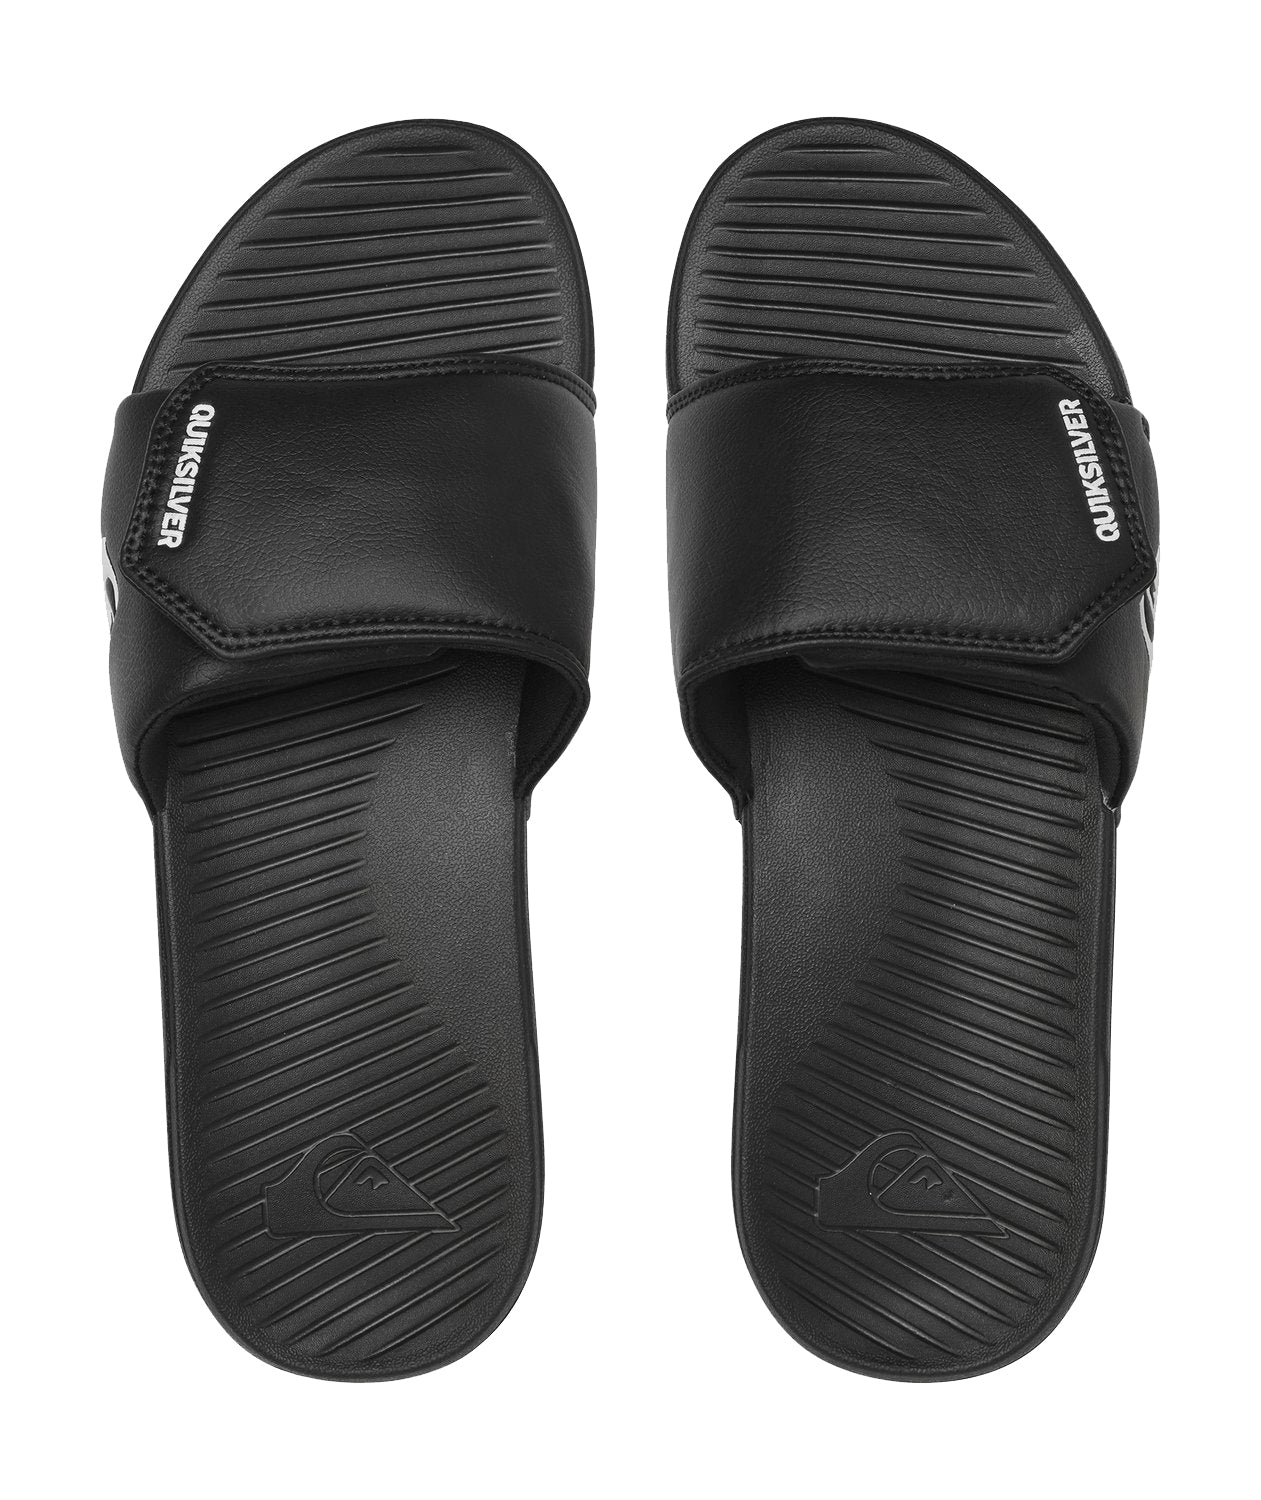 Quiksilver Bright Coast Adjust Mens Sandal XKWK-Black-White-Black 14